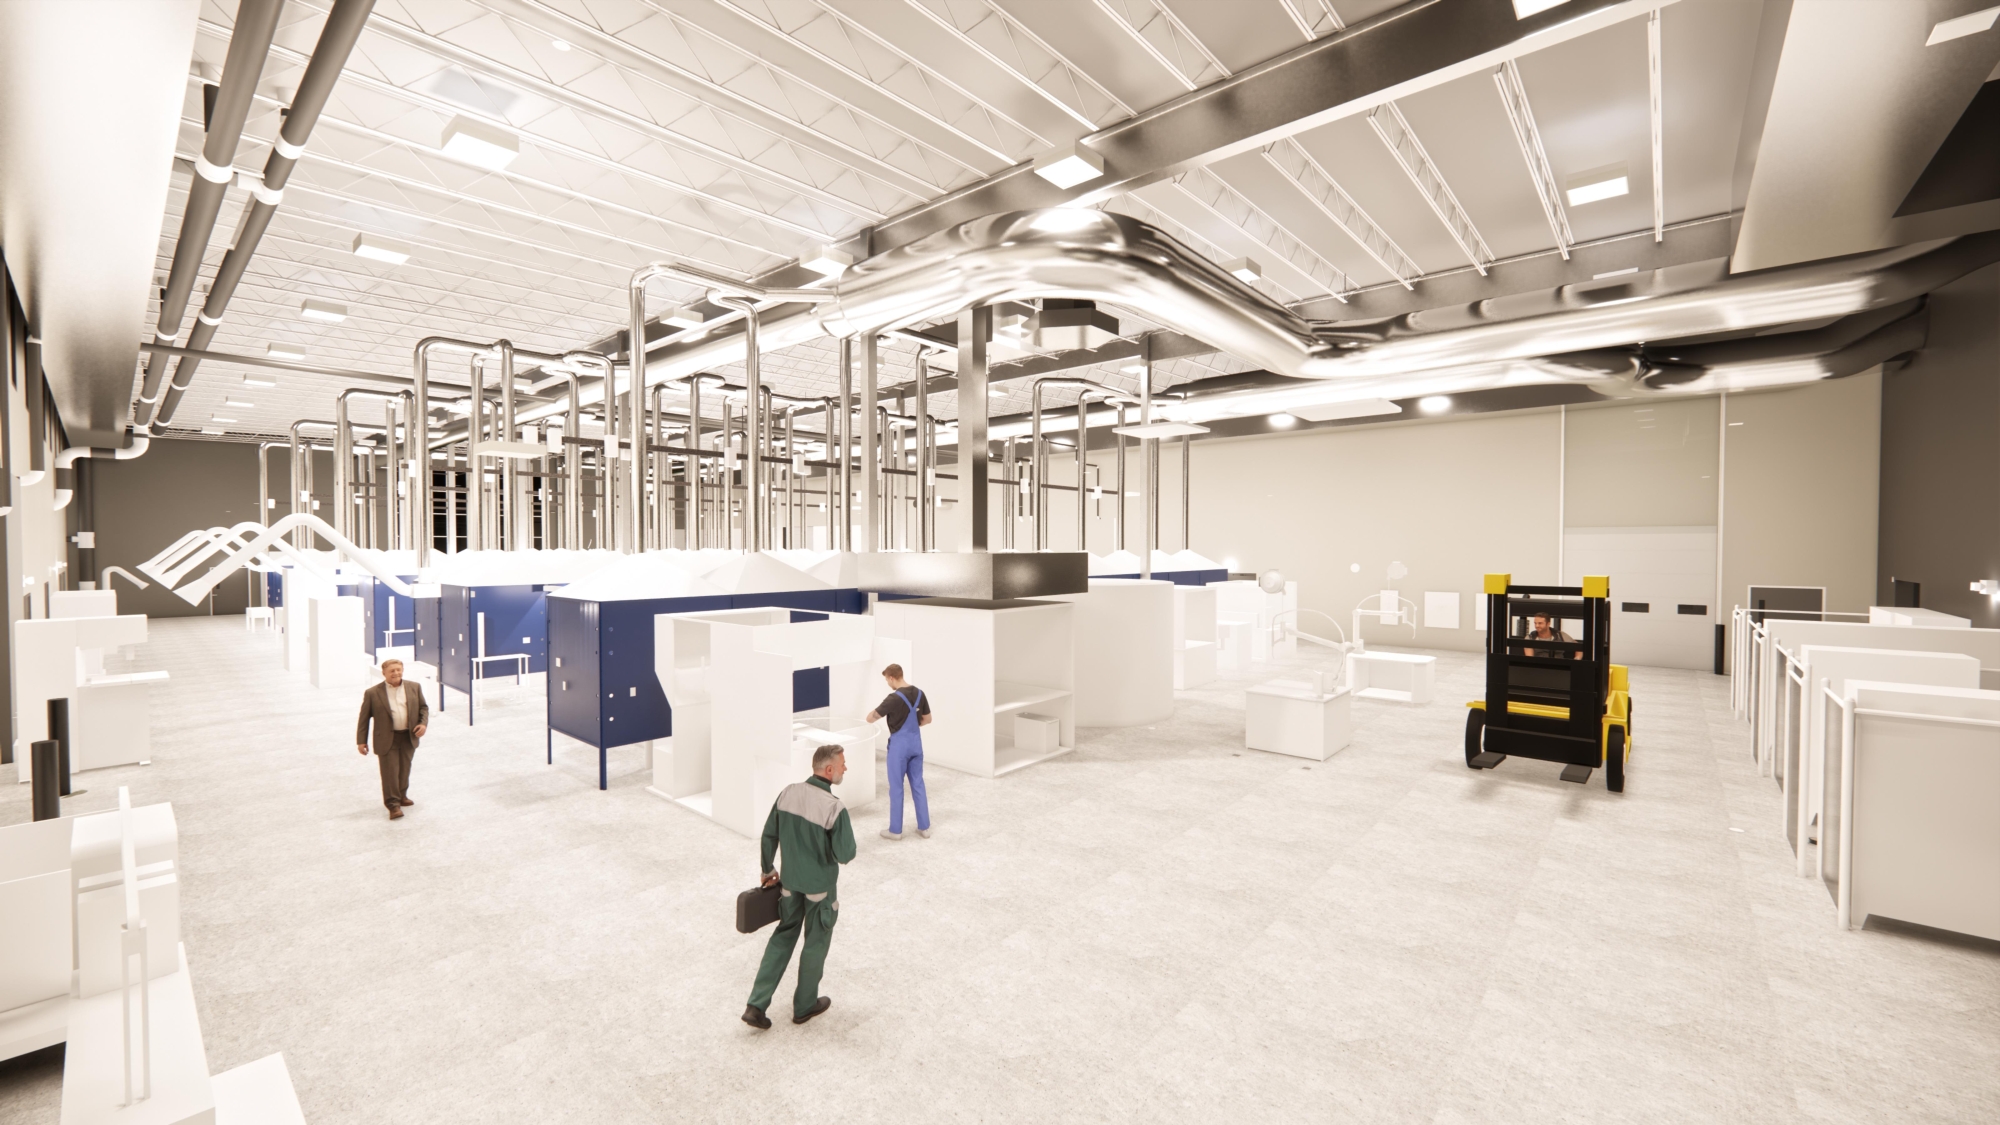 Welding Center Lab rendering